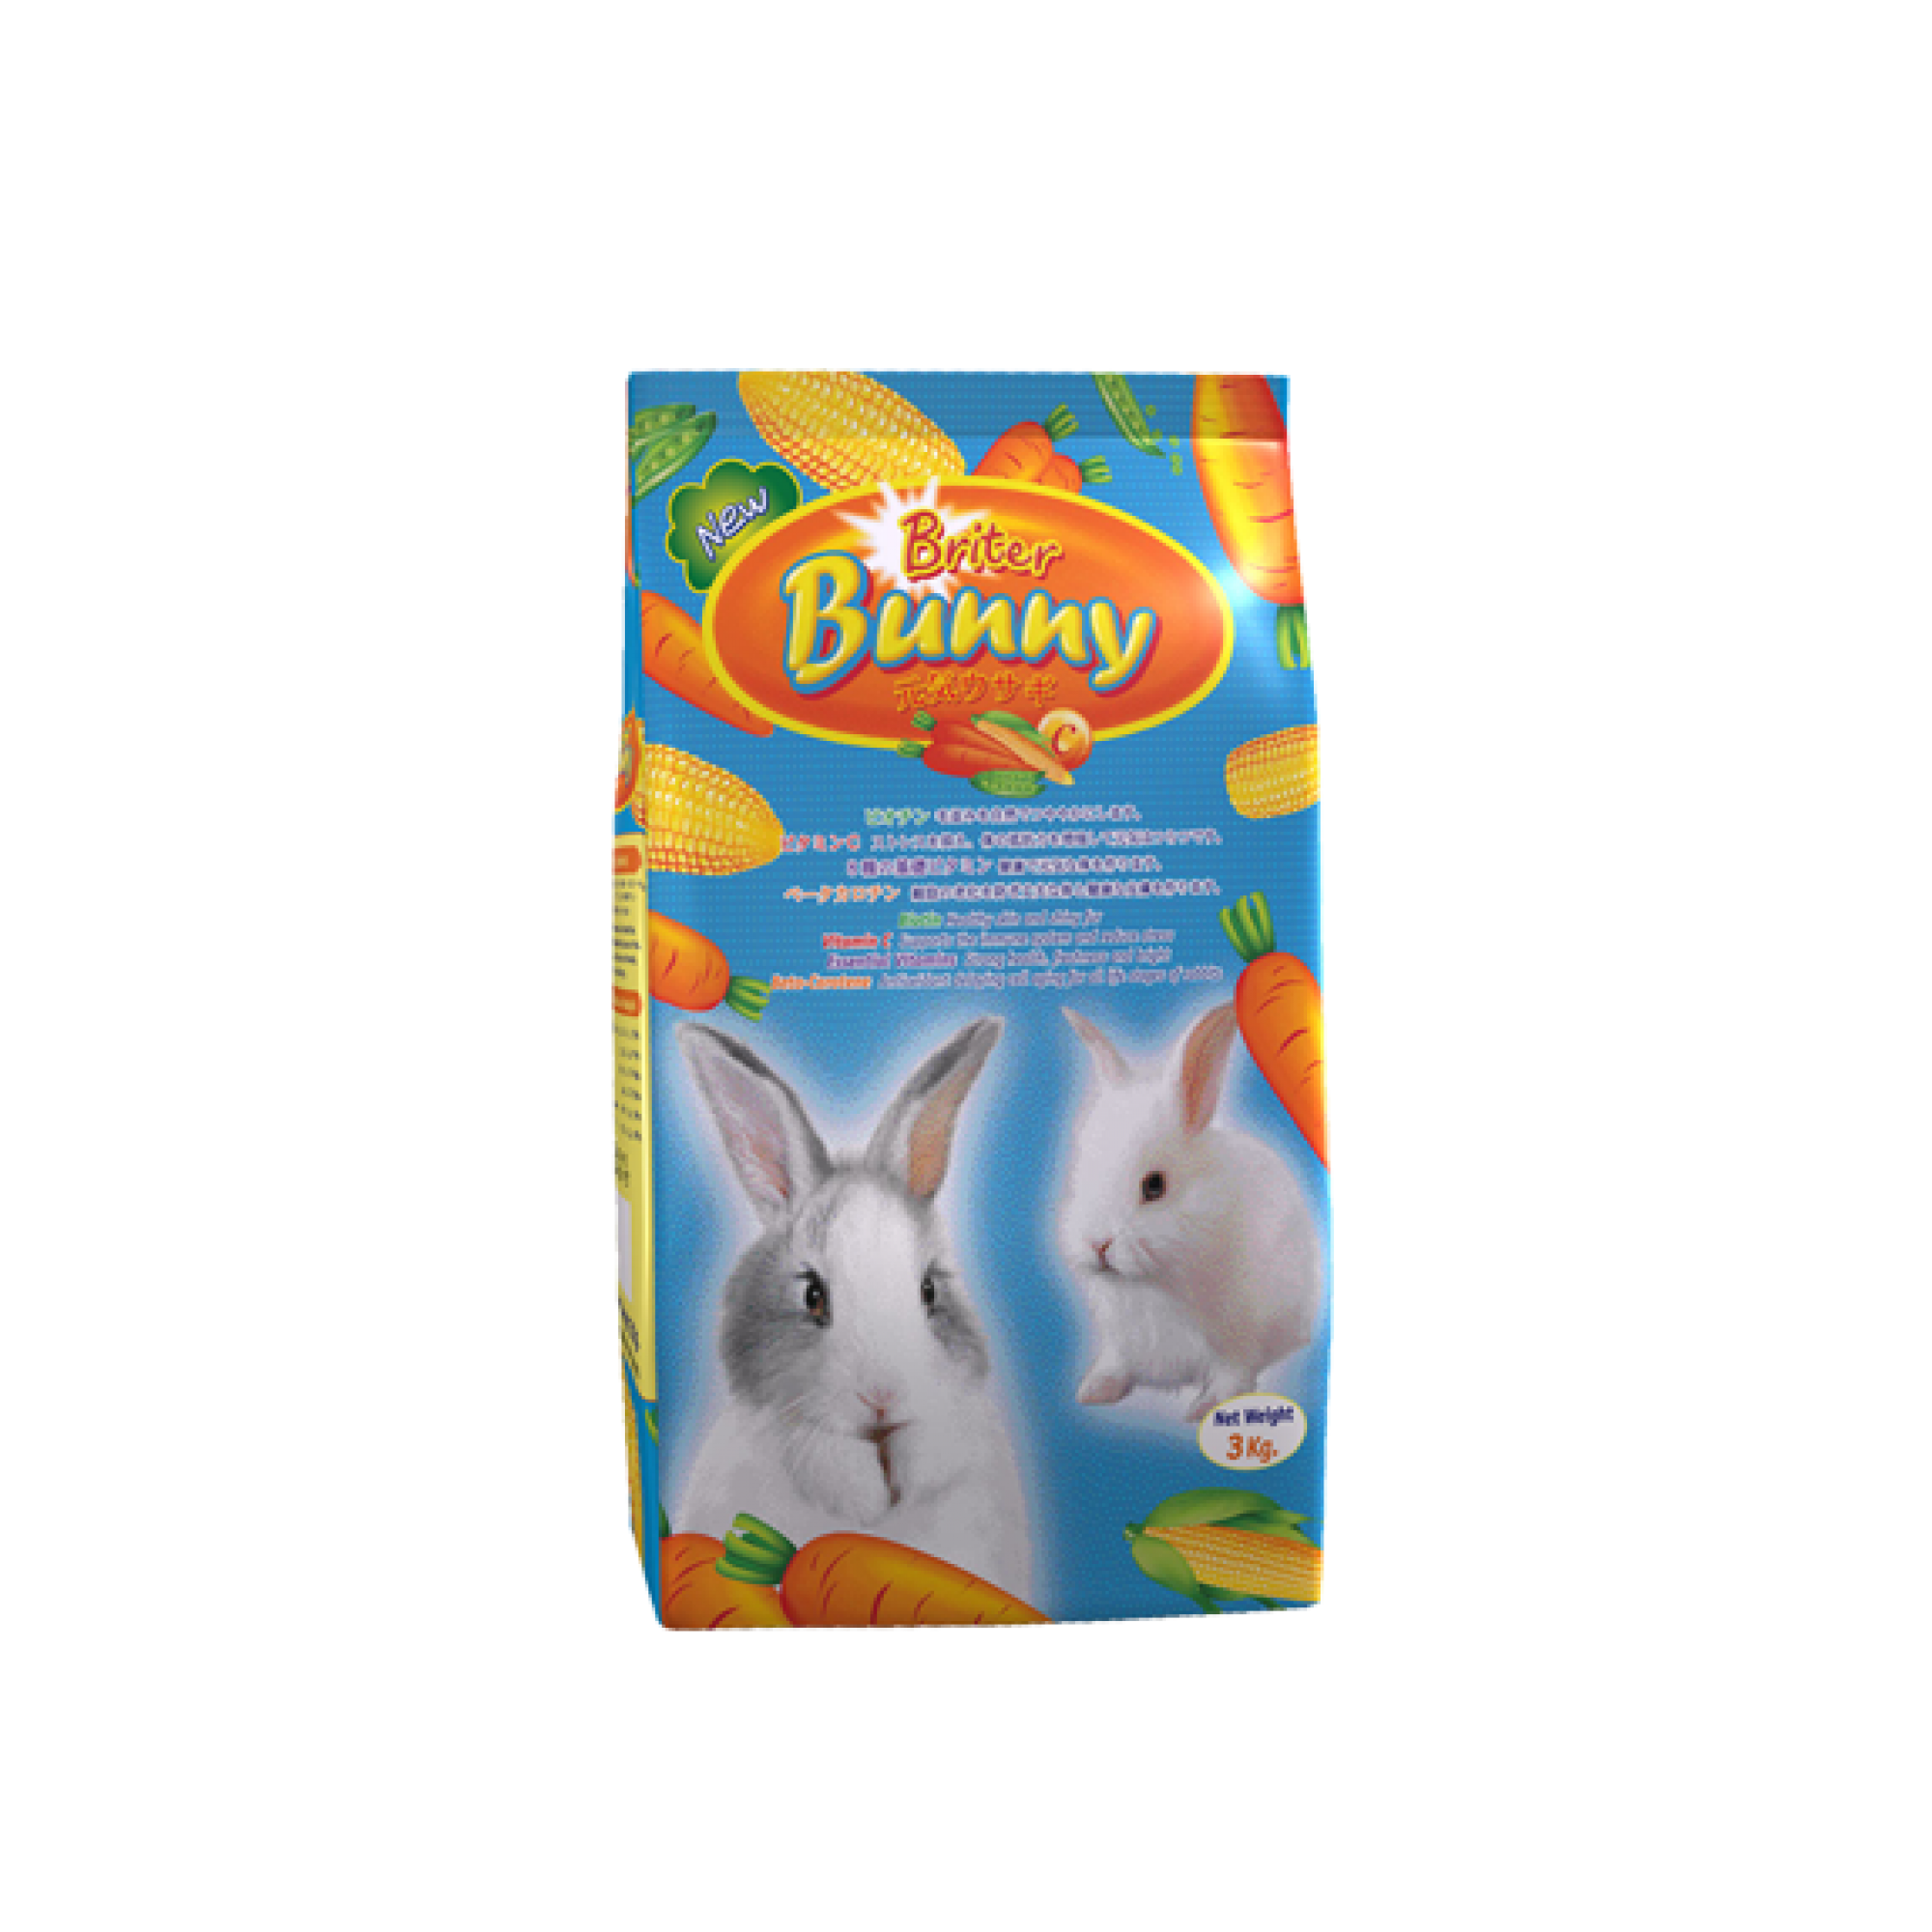 Briter Bunny Rabbit Food 3kg